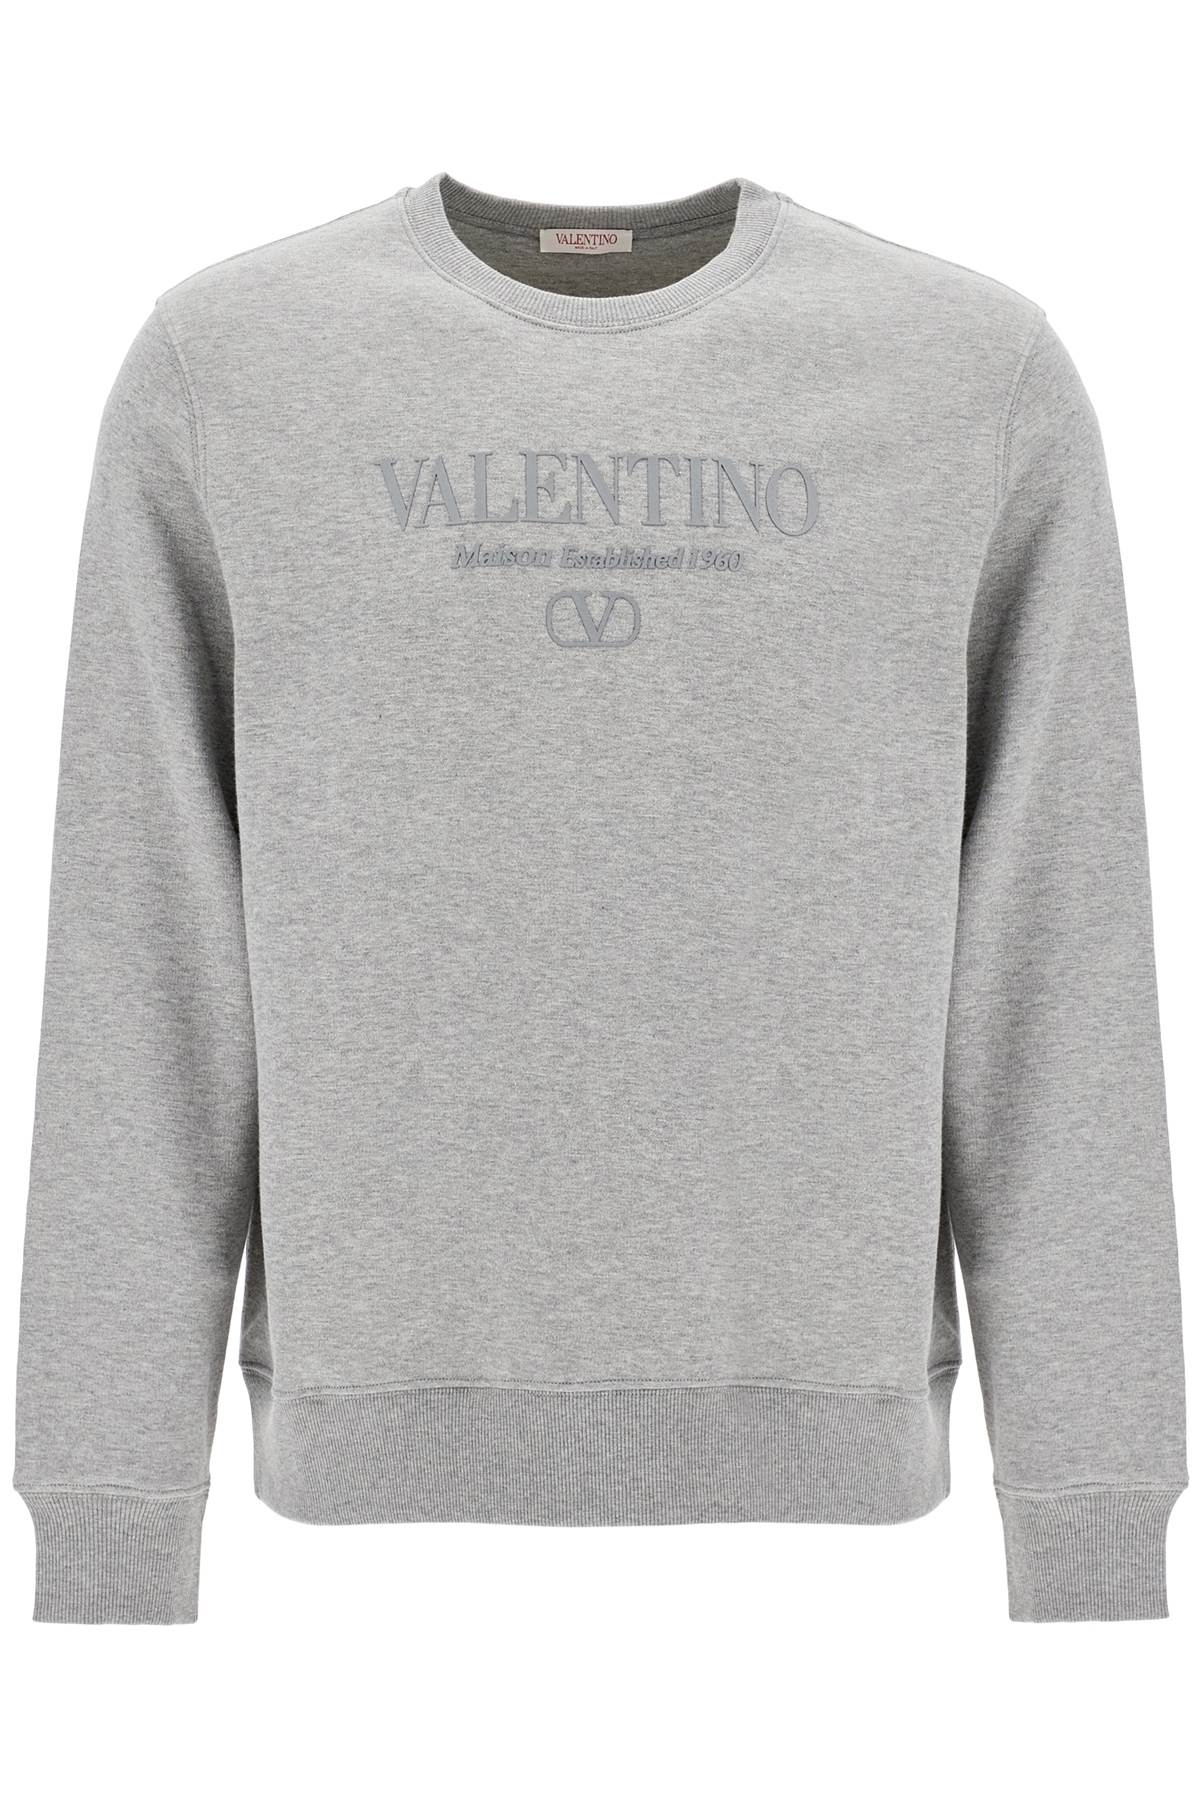 Valentino GARAVANI crewneck sweatshirt with logo - Grey